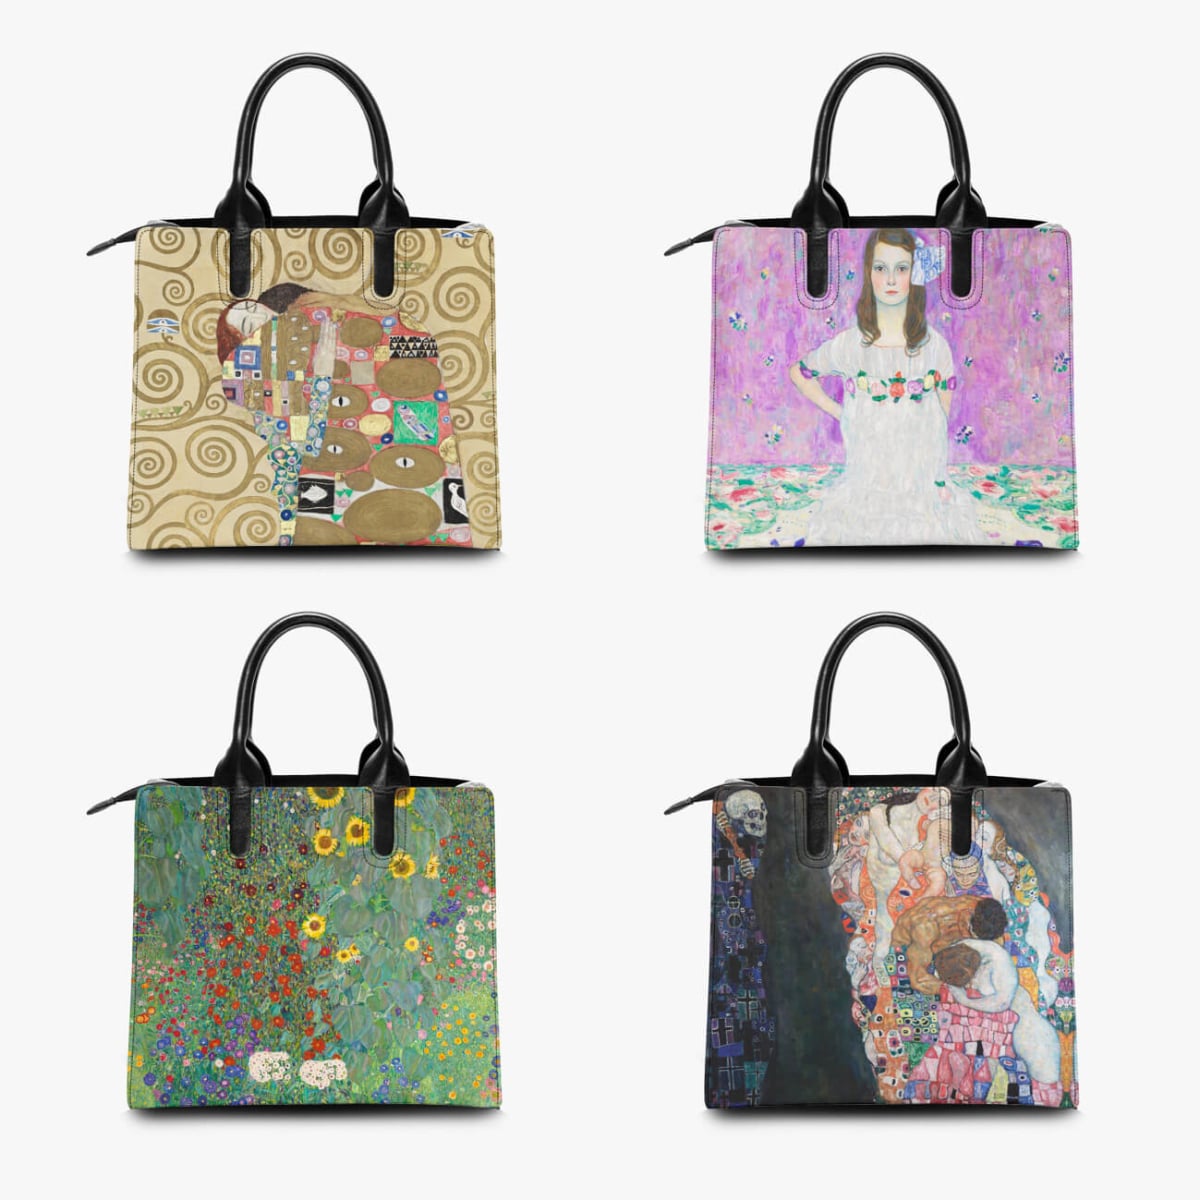 Gustav Klimt’s Danae Painting Art Leather Handbag